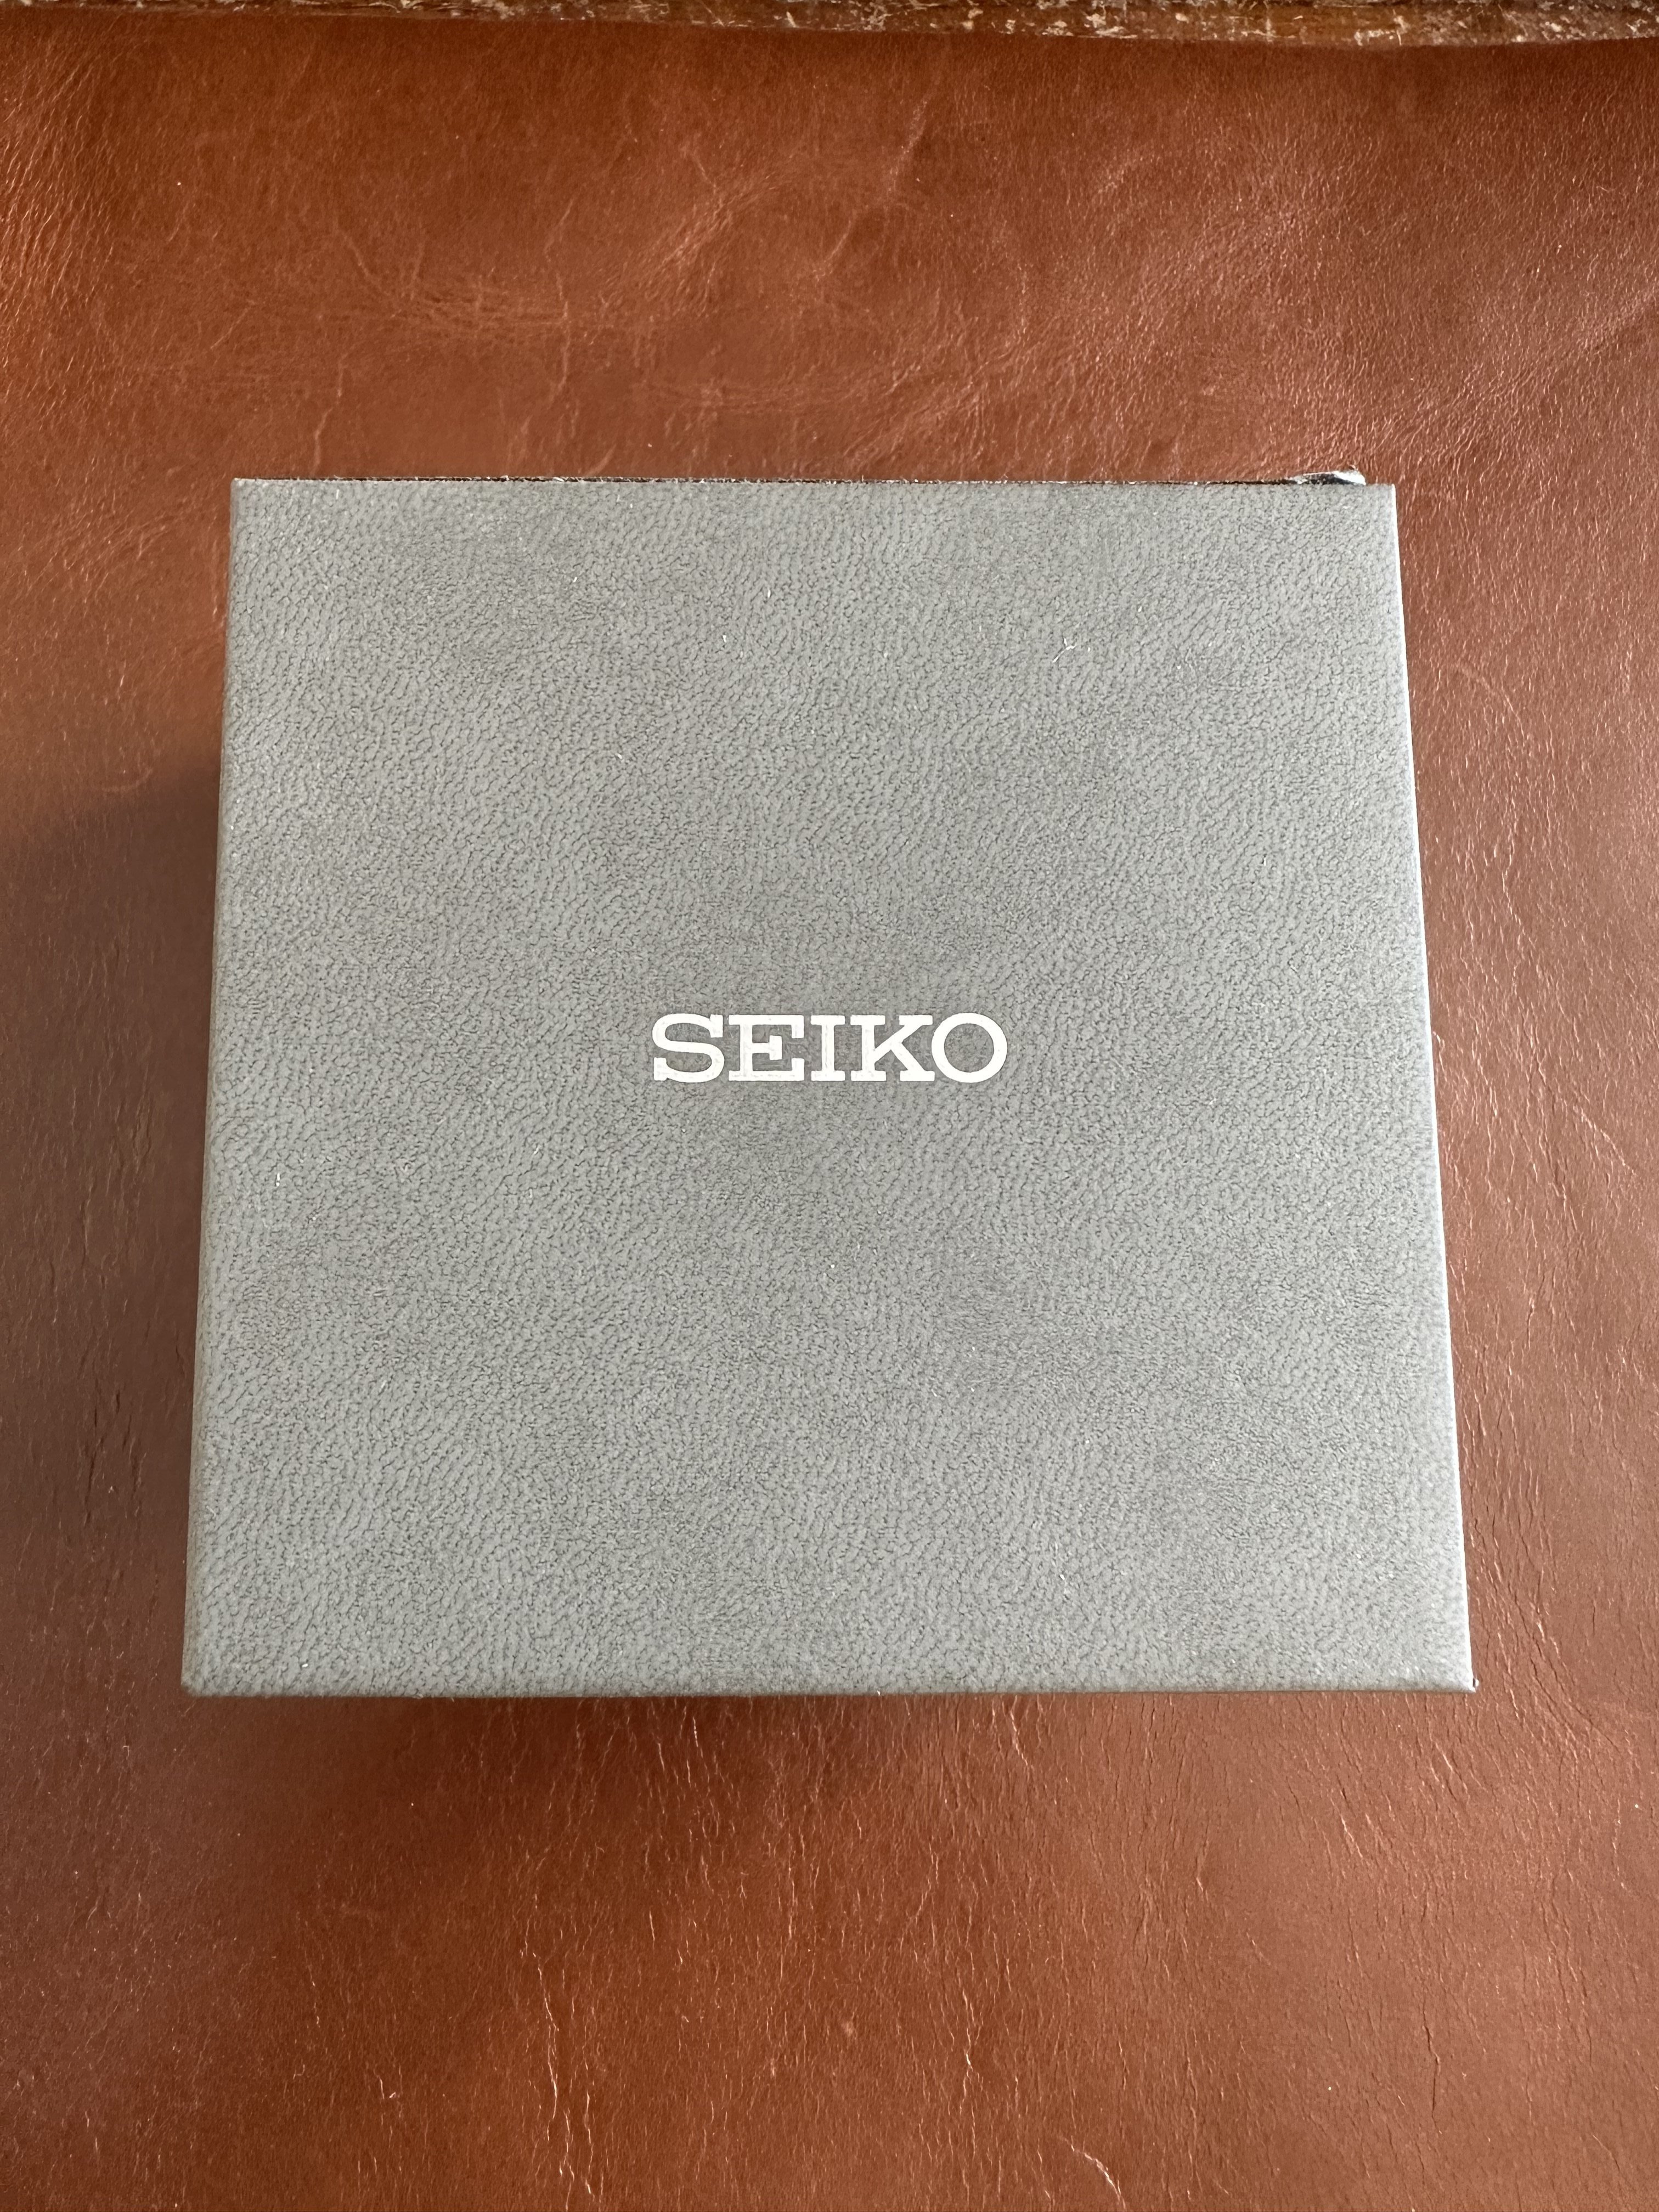 FS - FINAL PRICE DROP! - Seiko Presage SARY129 “Martini